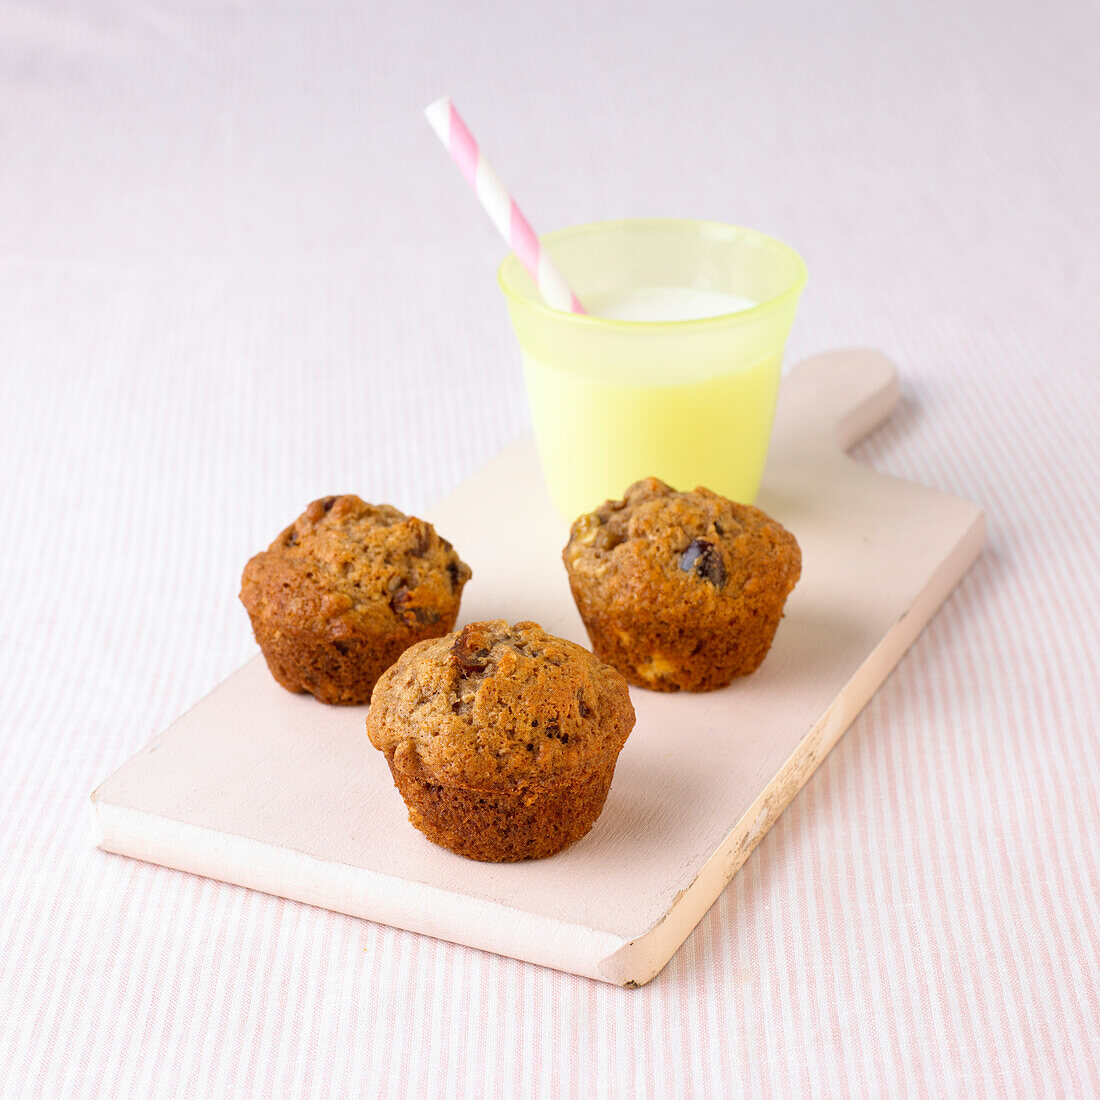 Mini muffins and glass of milk